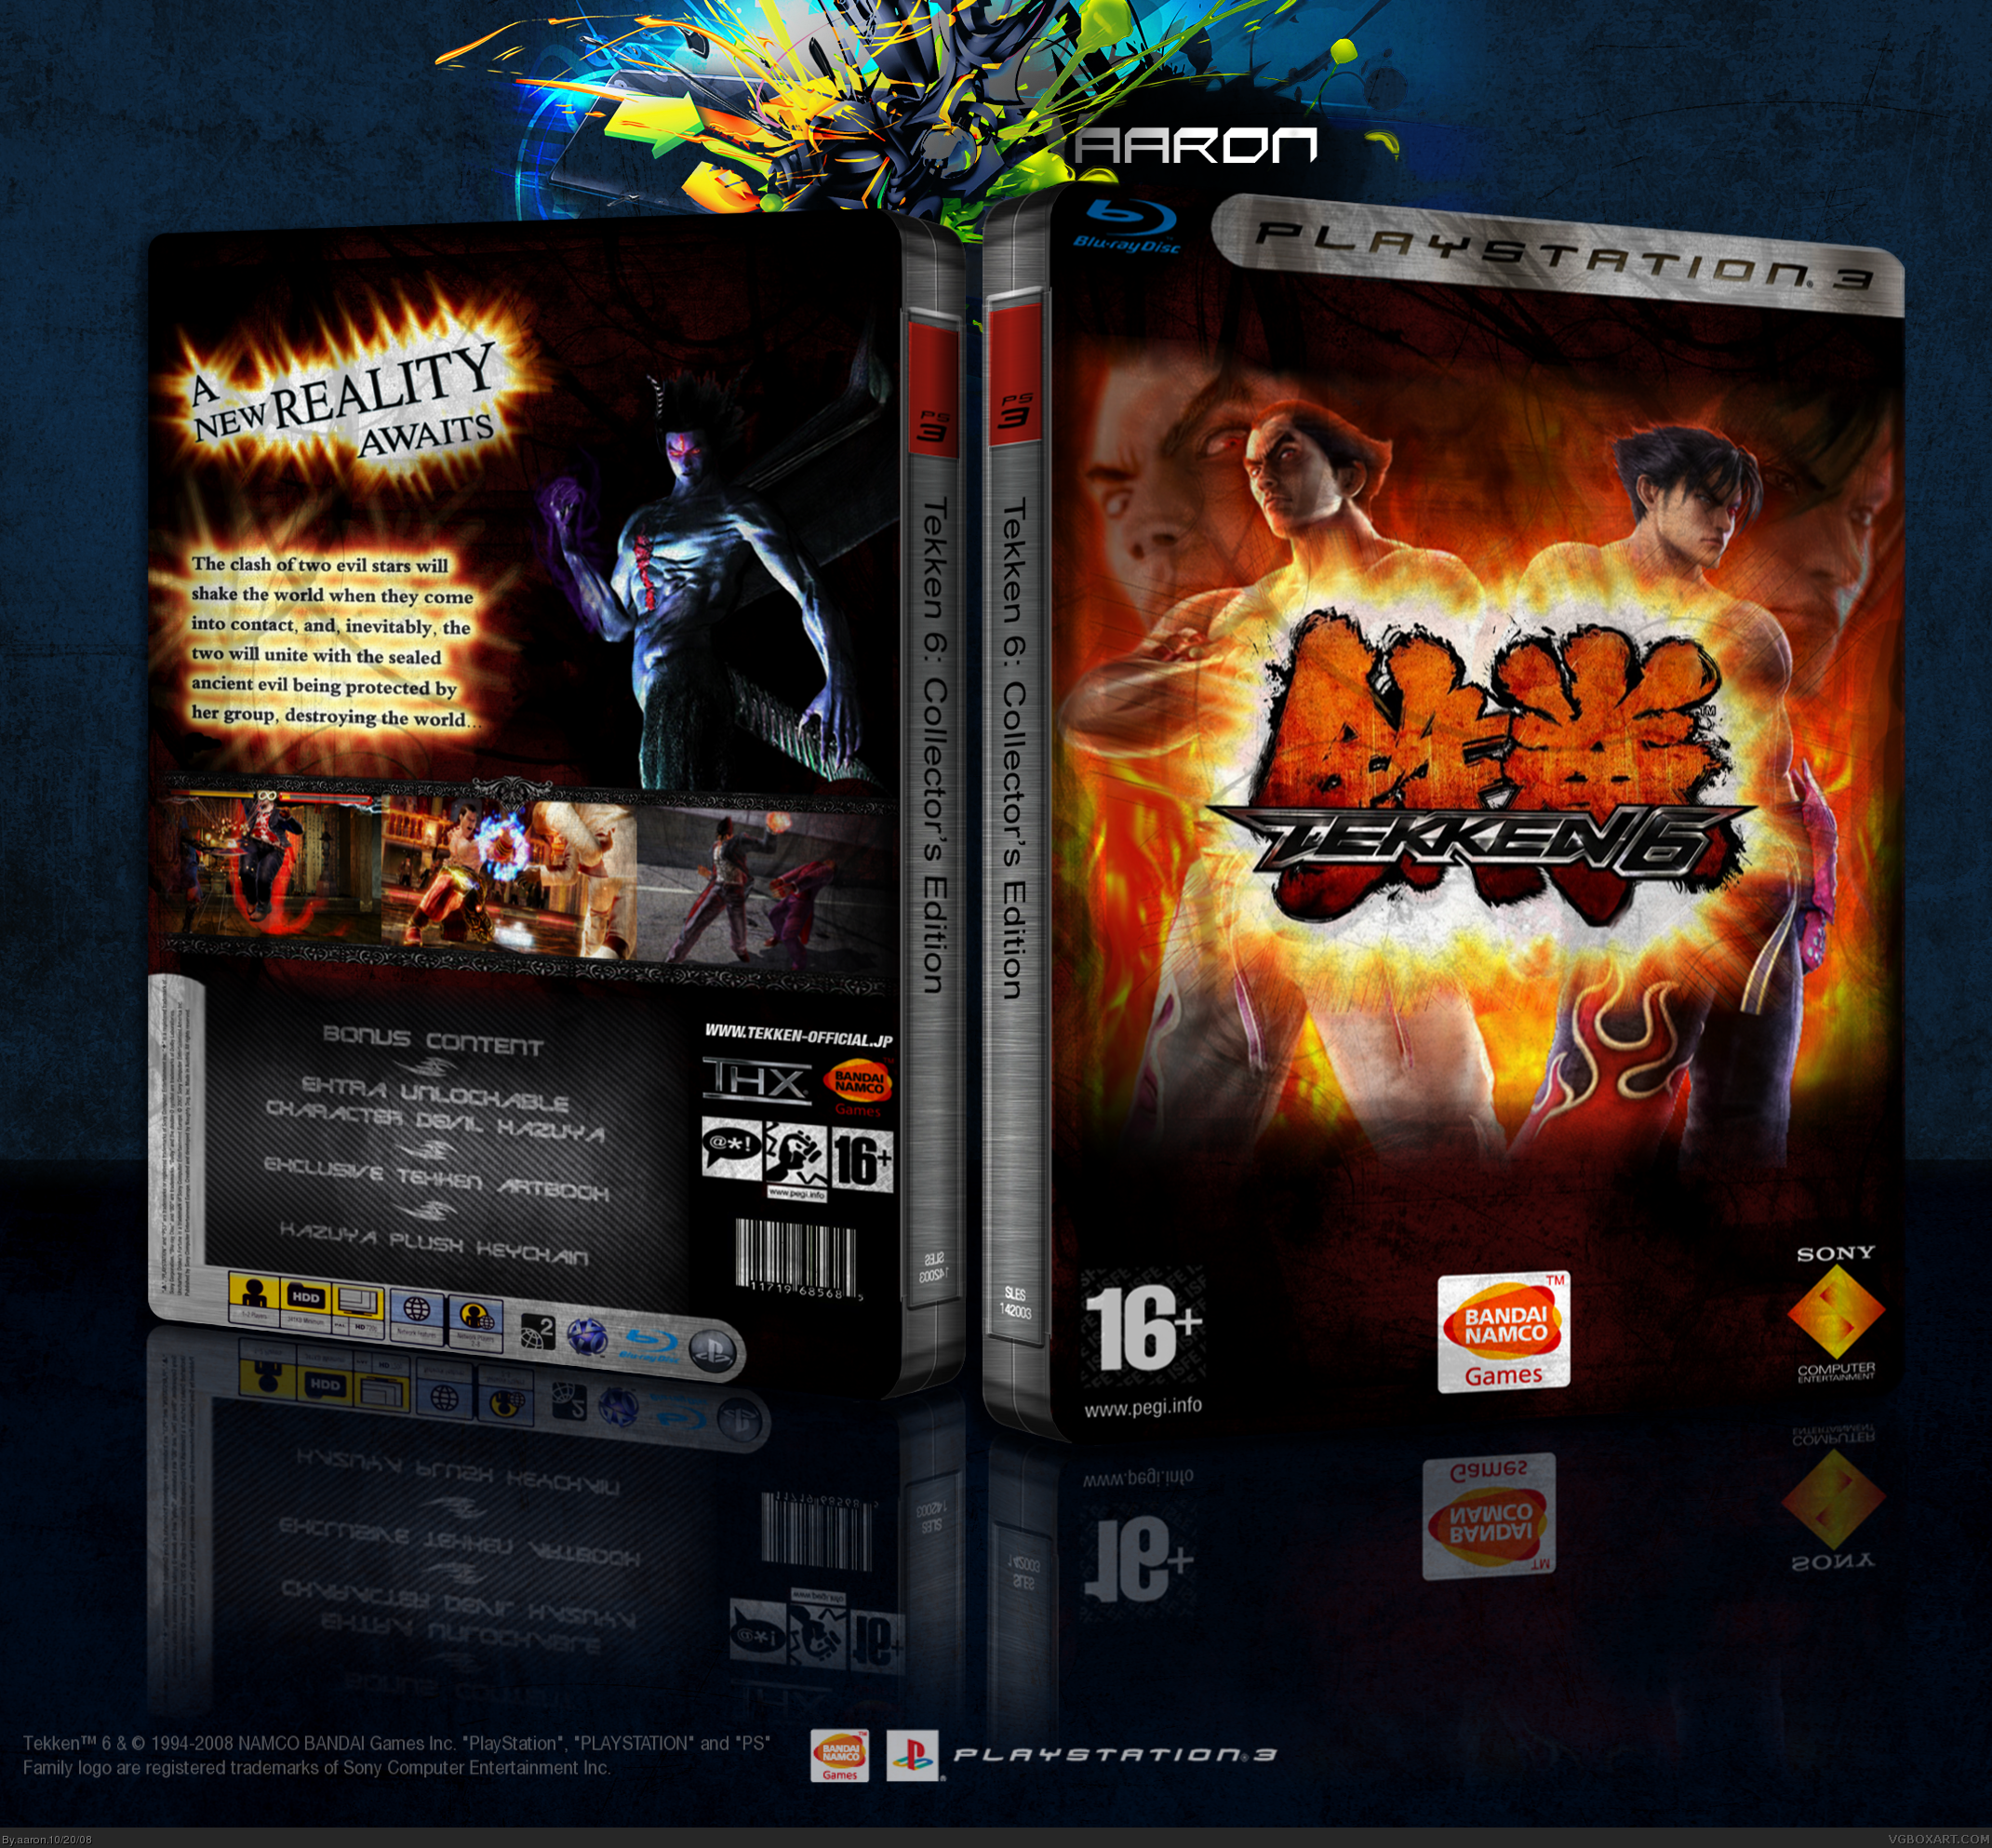 Tekken 6: Collector's Edition box cover